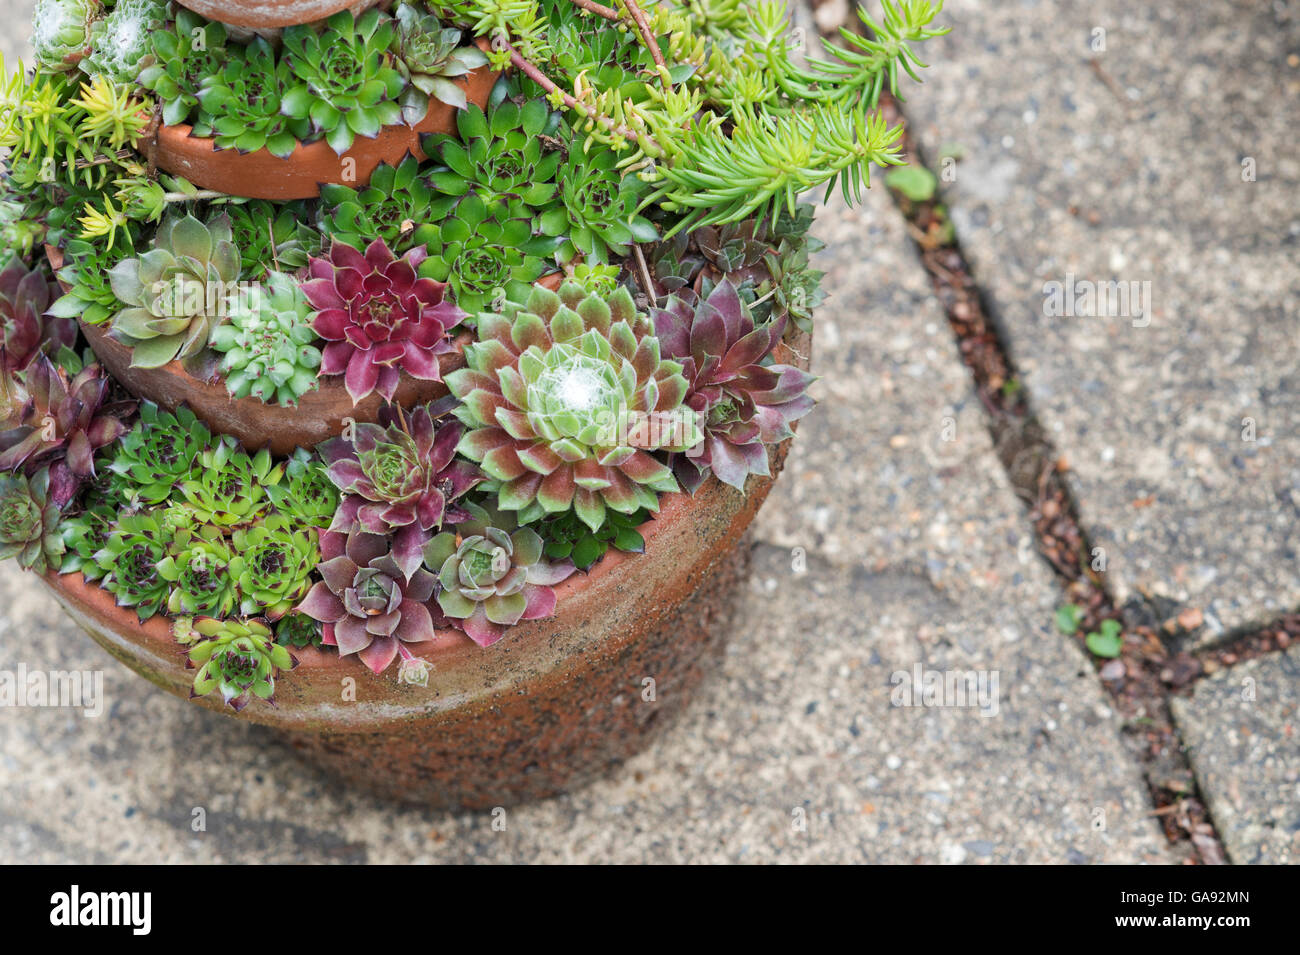 Sempervivum. Houseleeks in flower pots Stock Photo